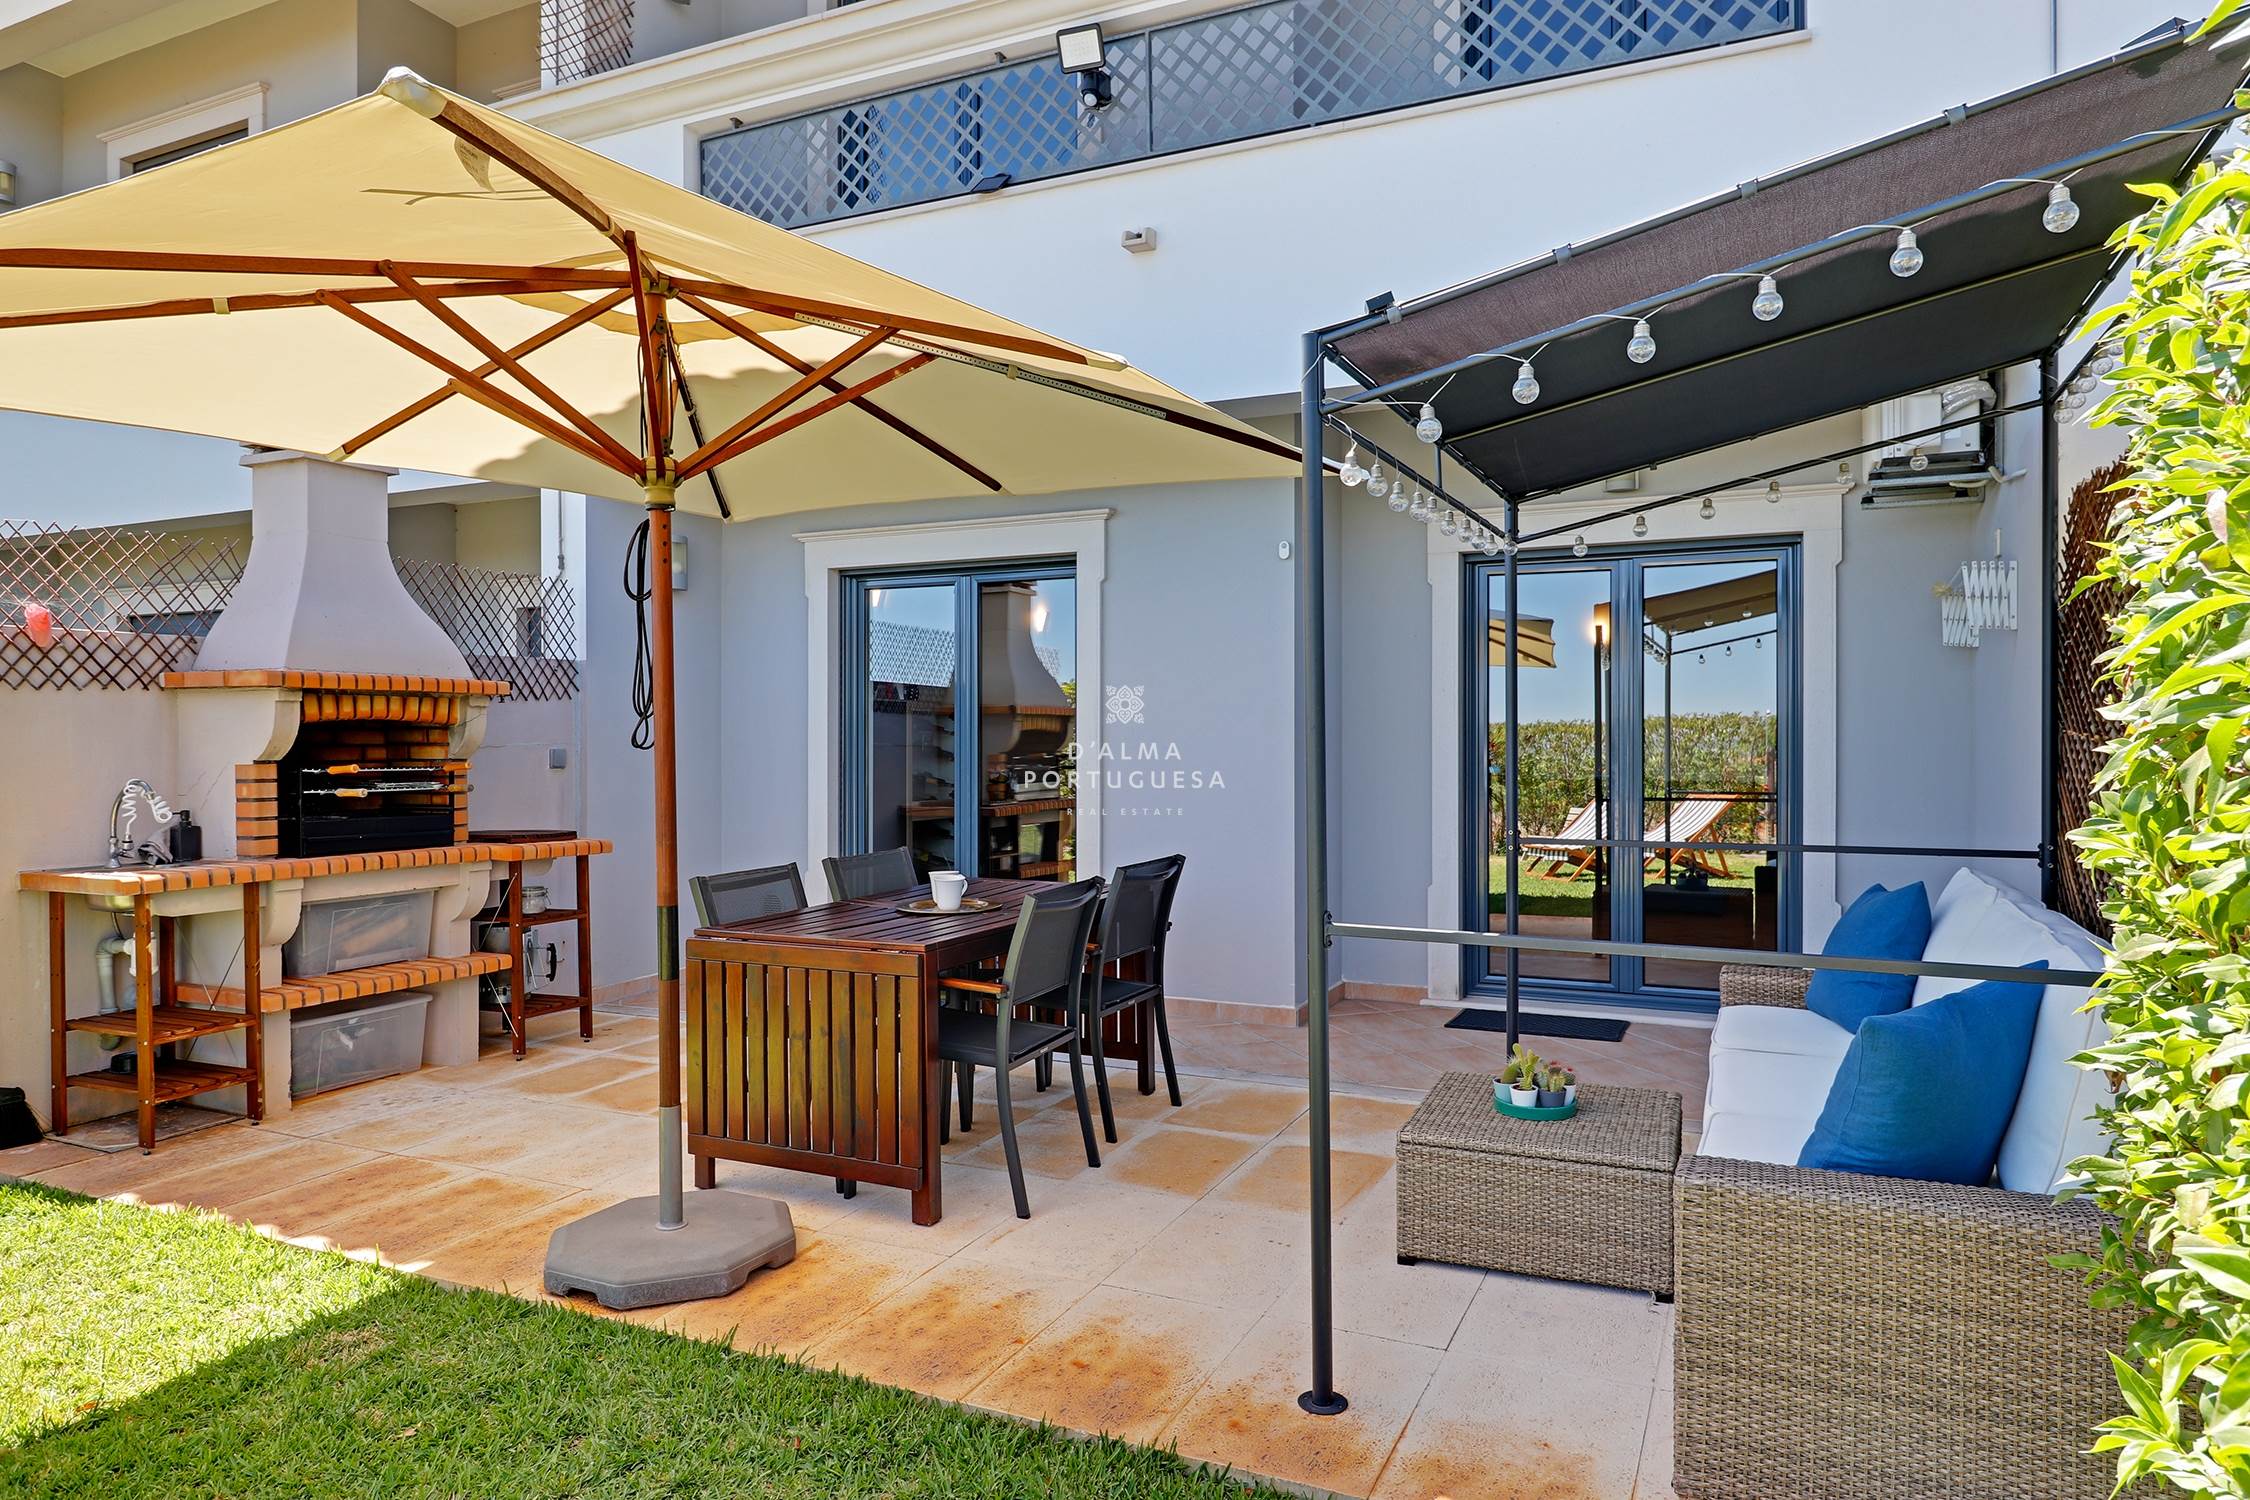 3 bedroom villa,garage,pool,quiet area,near the beach